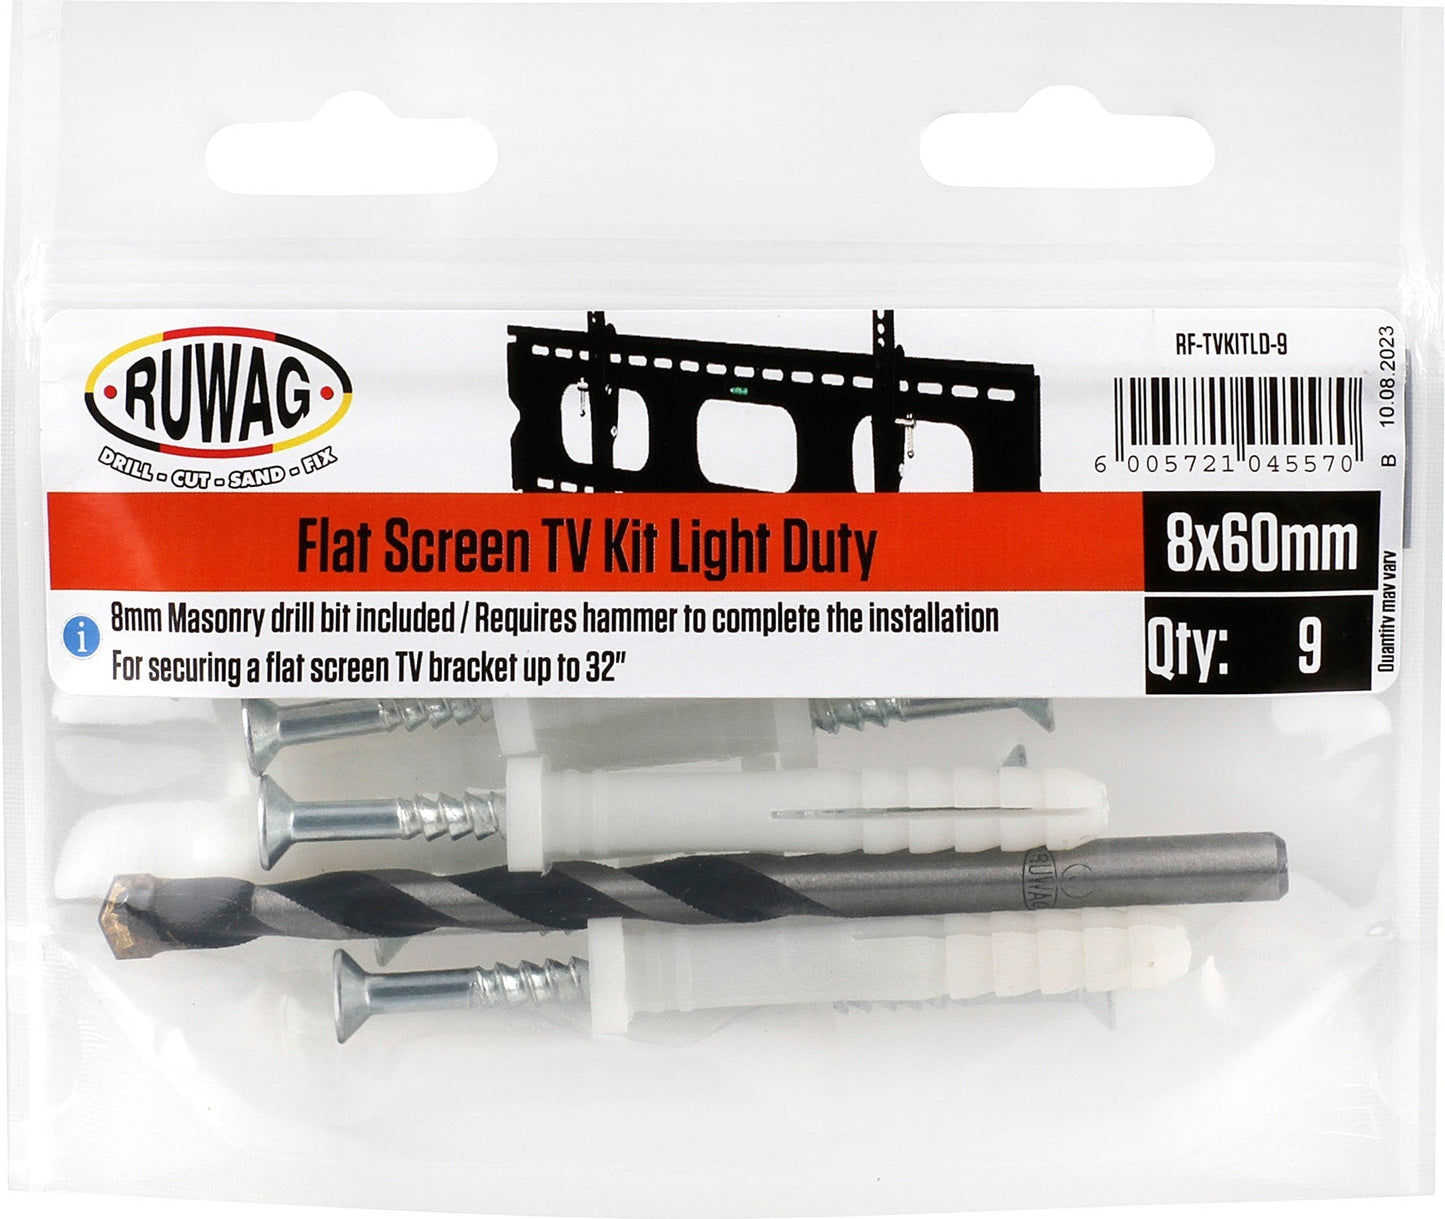 RUWAG Flat Screen TV Kit Light Duty - Premium Hardware from Ruwag - Just R 34.04! Shop now at Securadeal